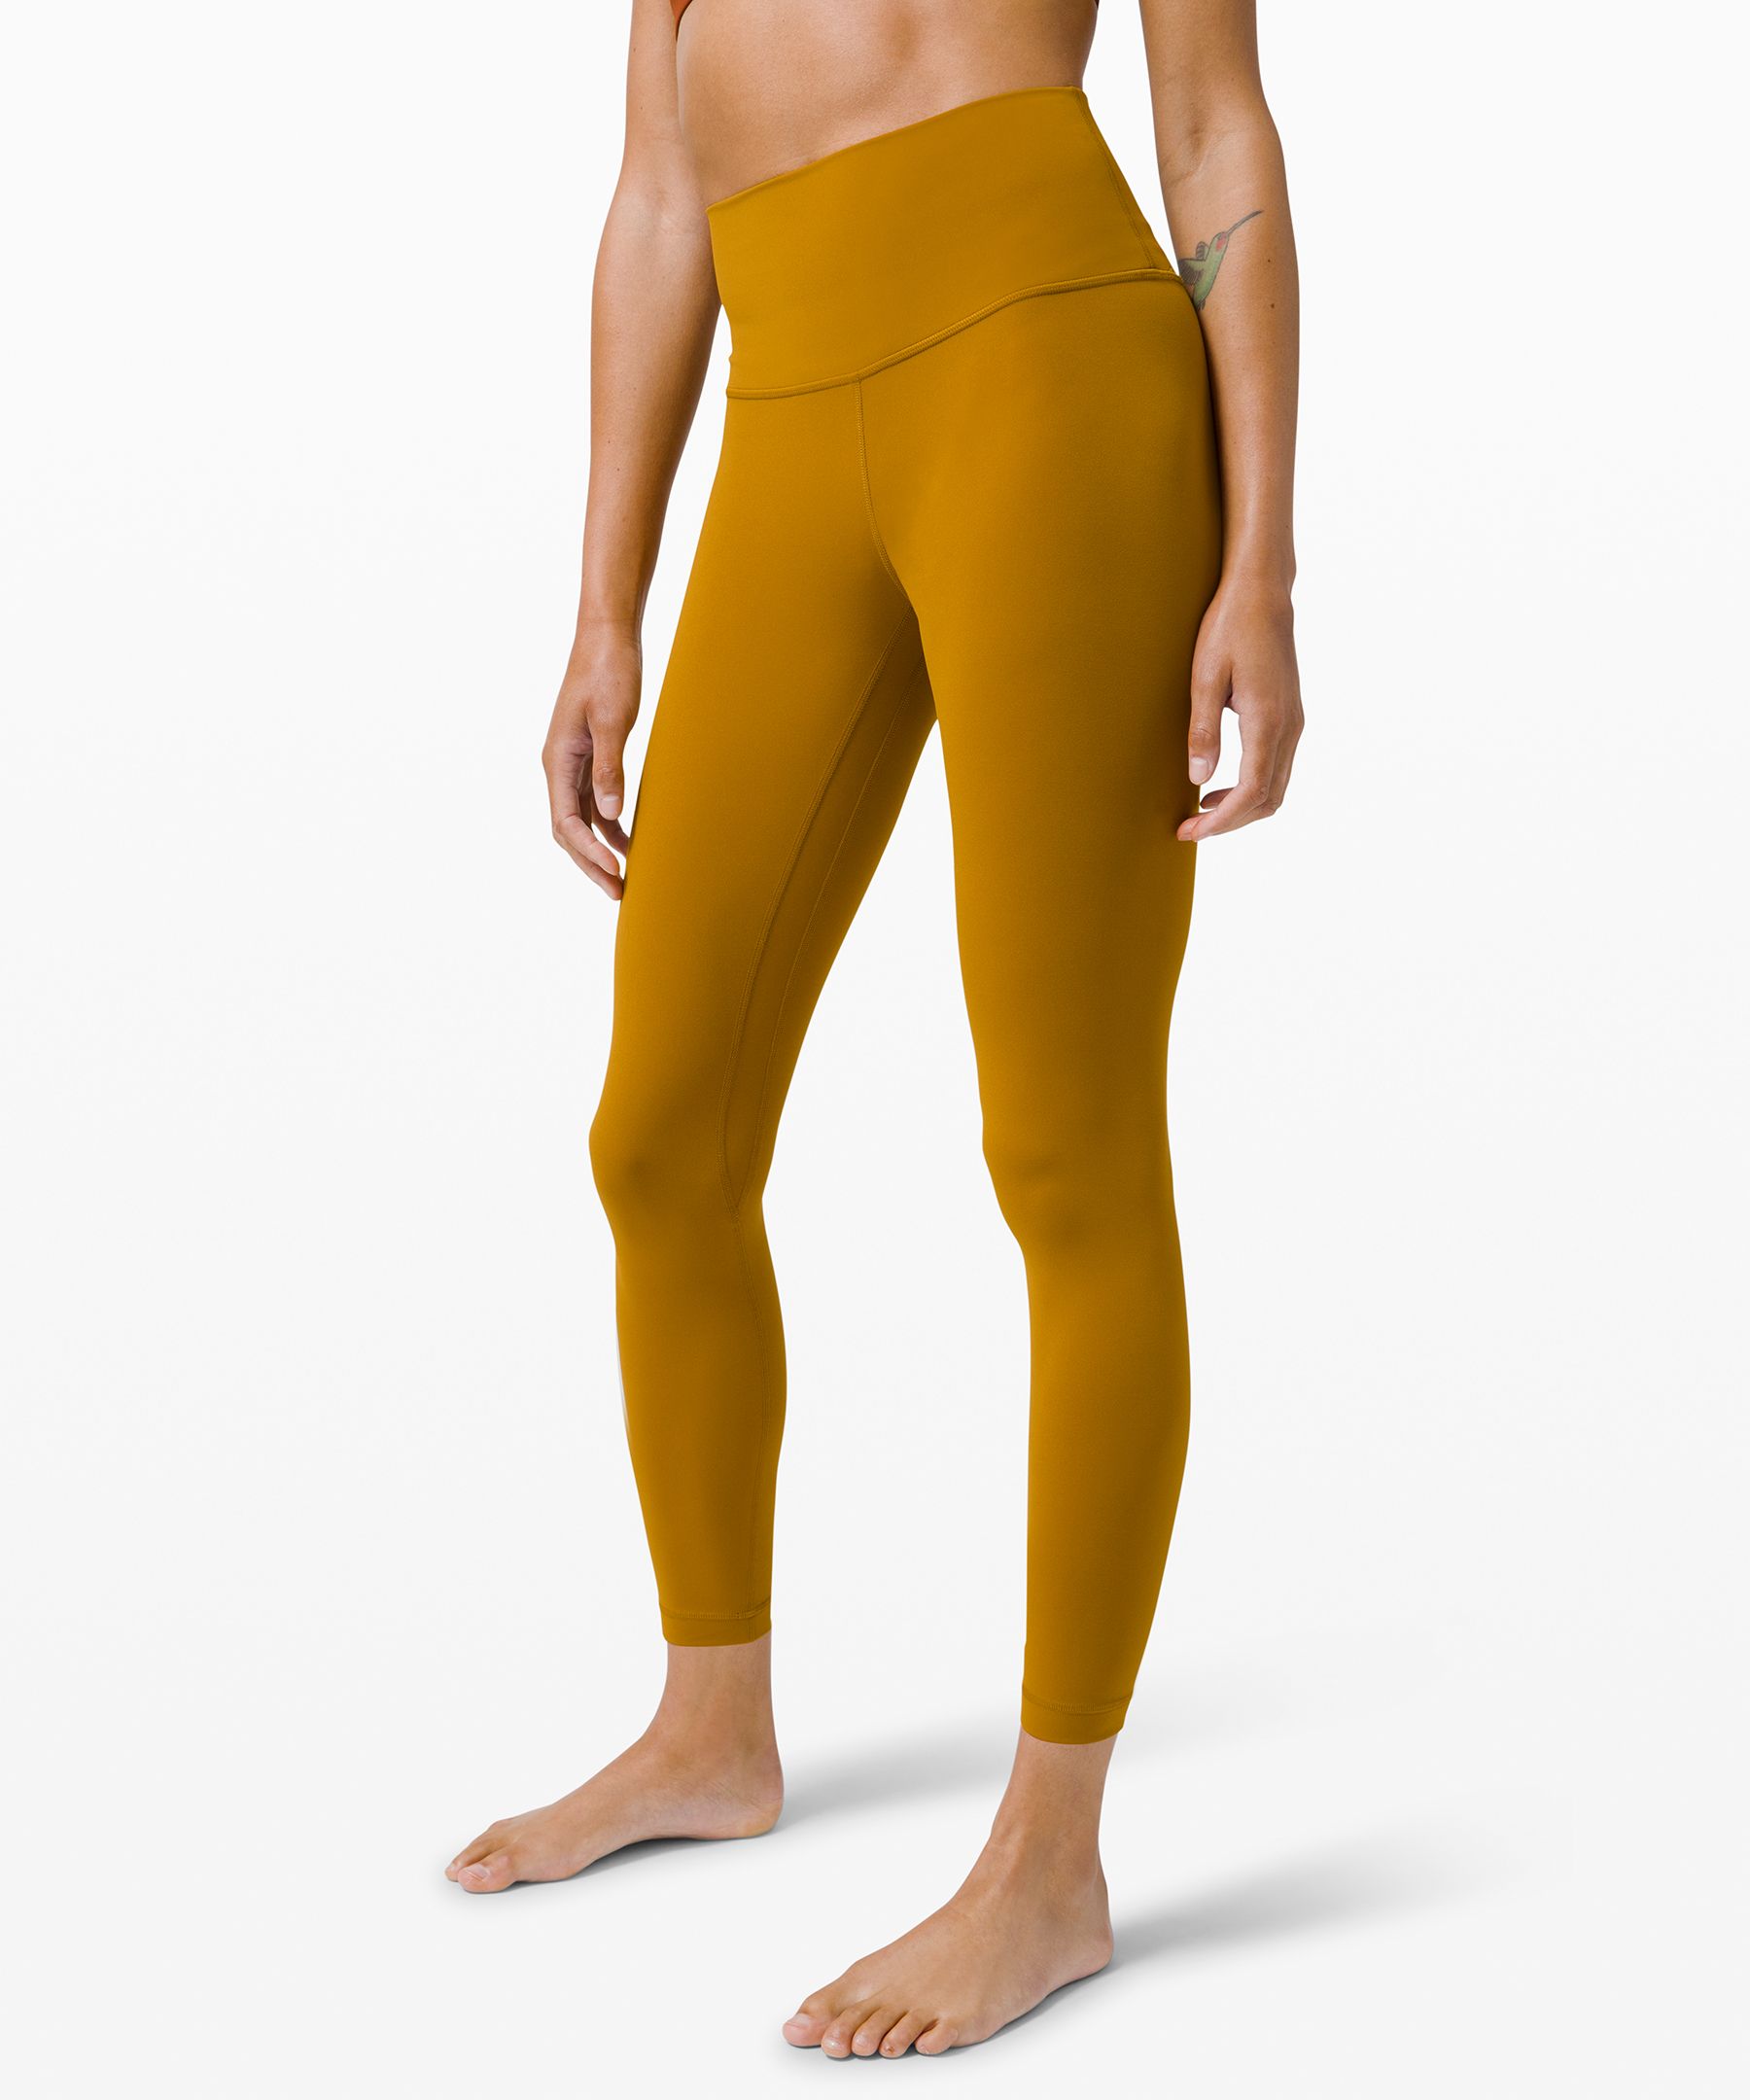 yellow lululemon leggings